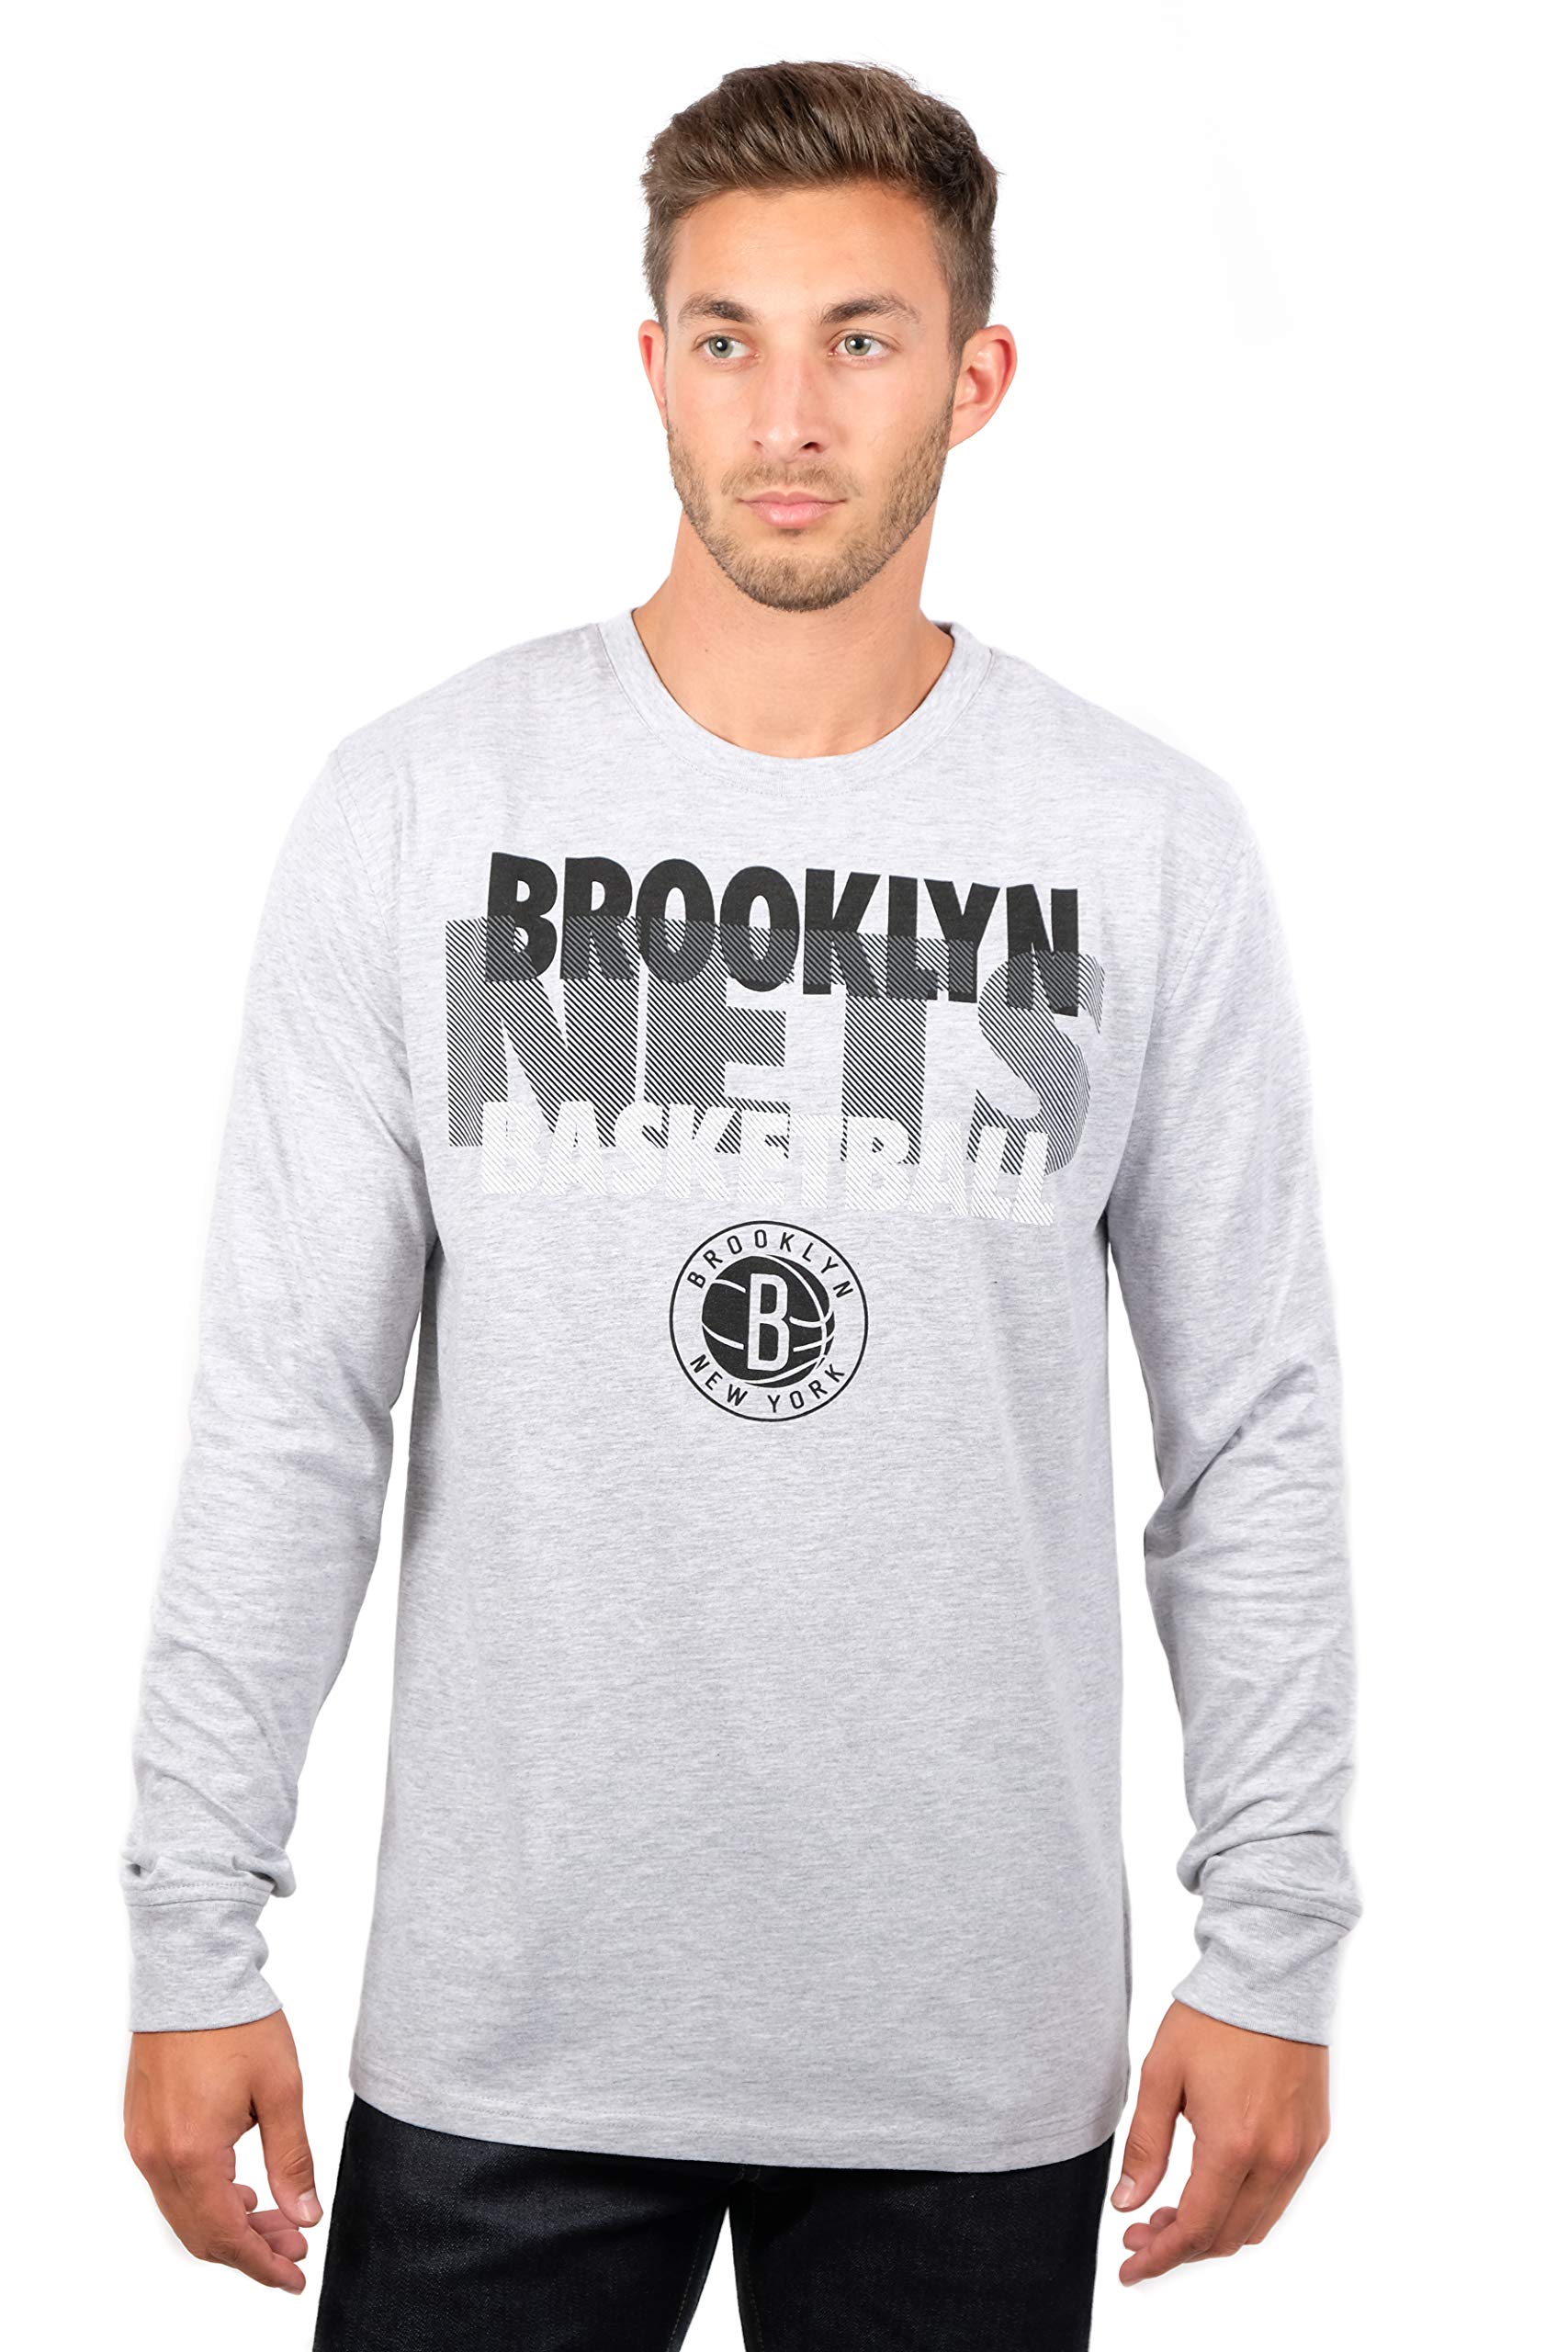 Brooklyn Nets T-Shirts in Brooklyn Nets Team Shop